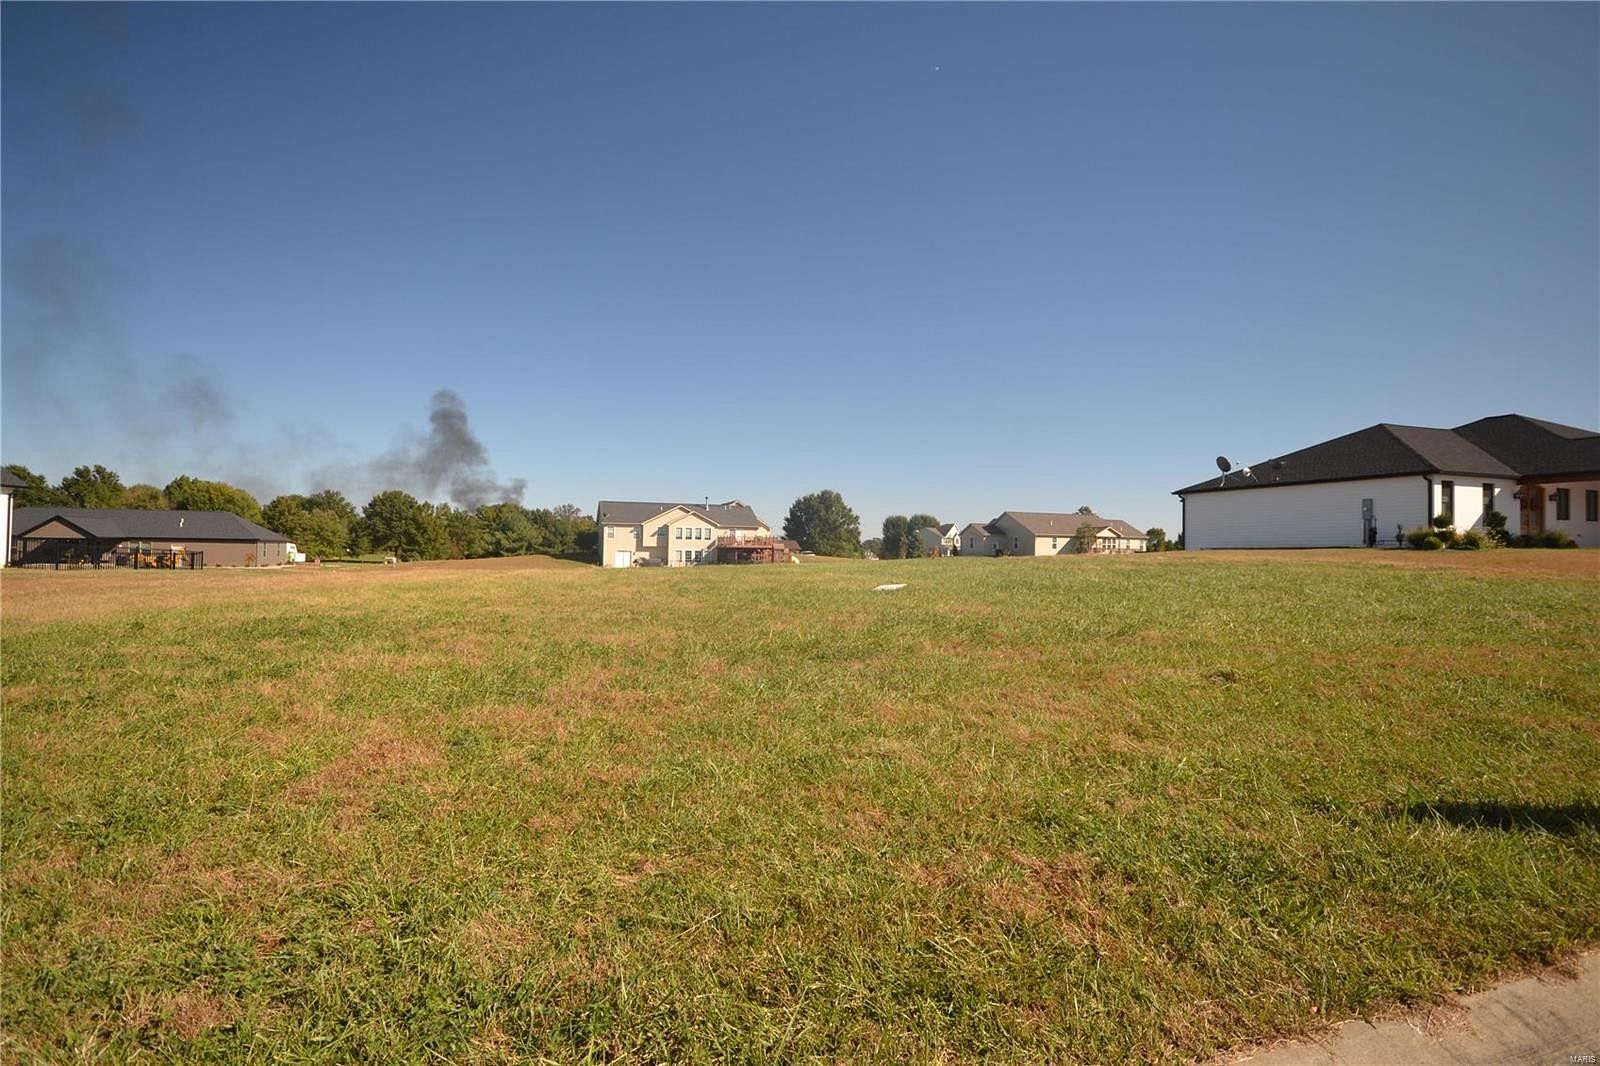 0.5 Acres of Residential Land for Sale in Smithton, Illinois